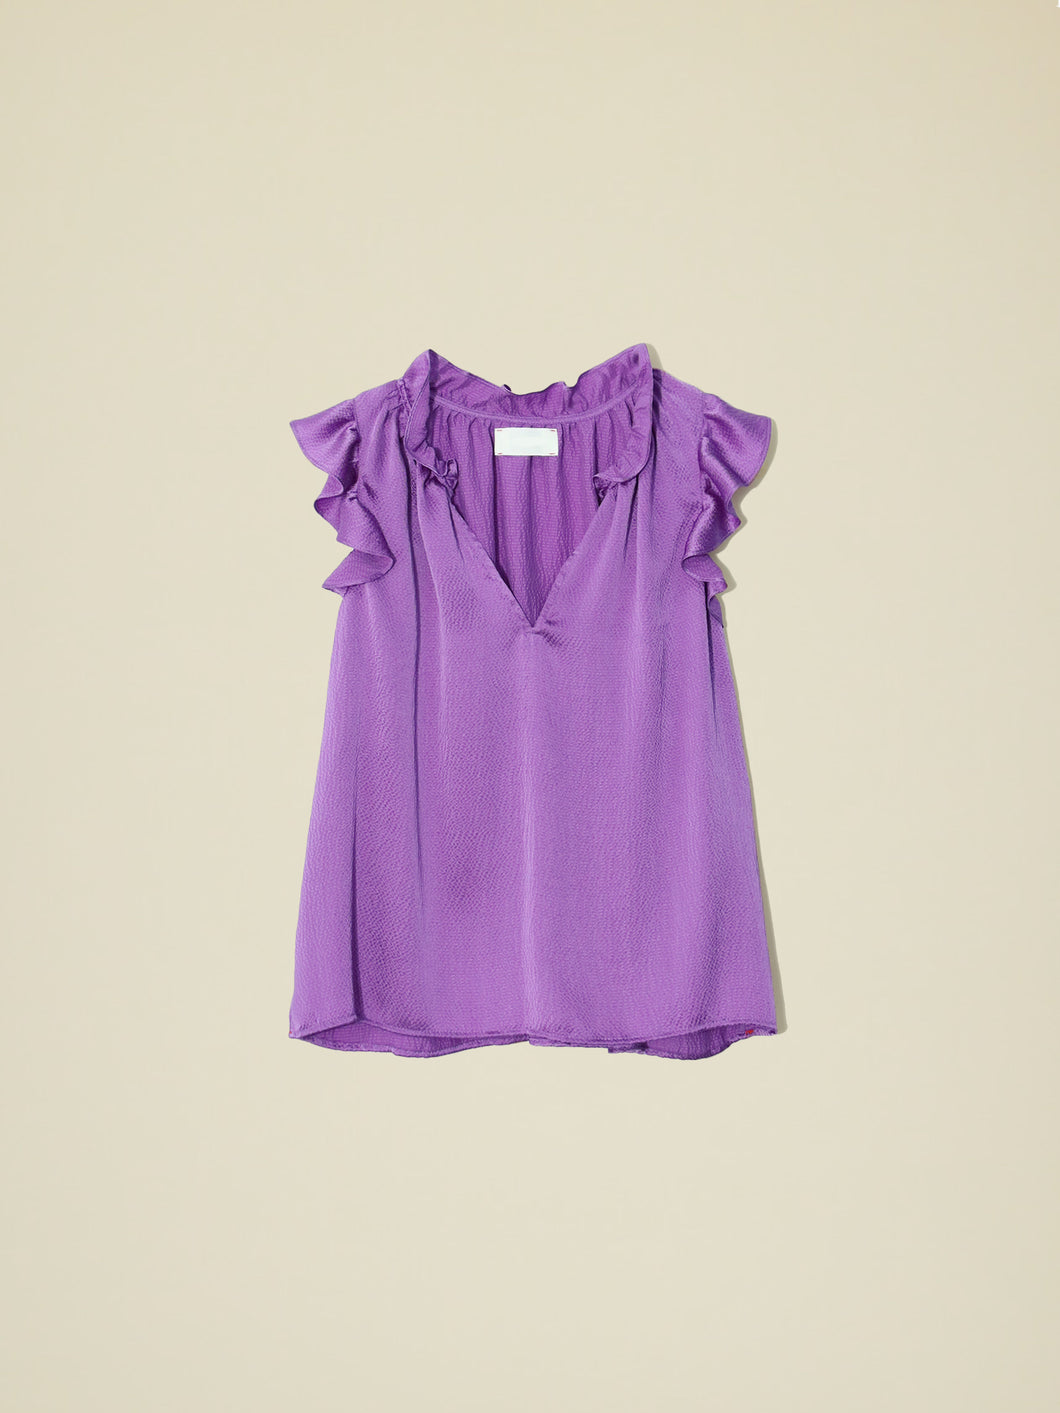 Xix365453 Purple Flutter Sleeve Top